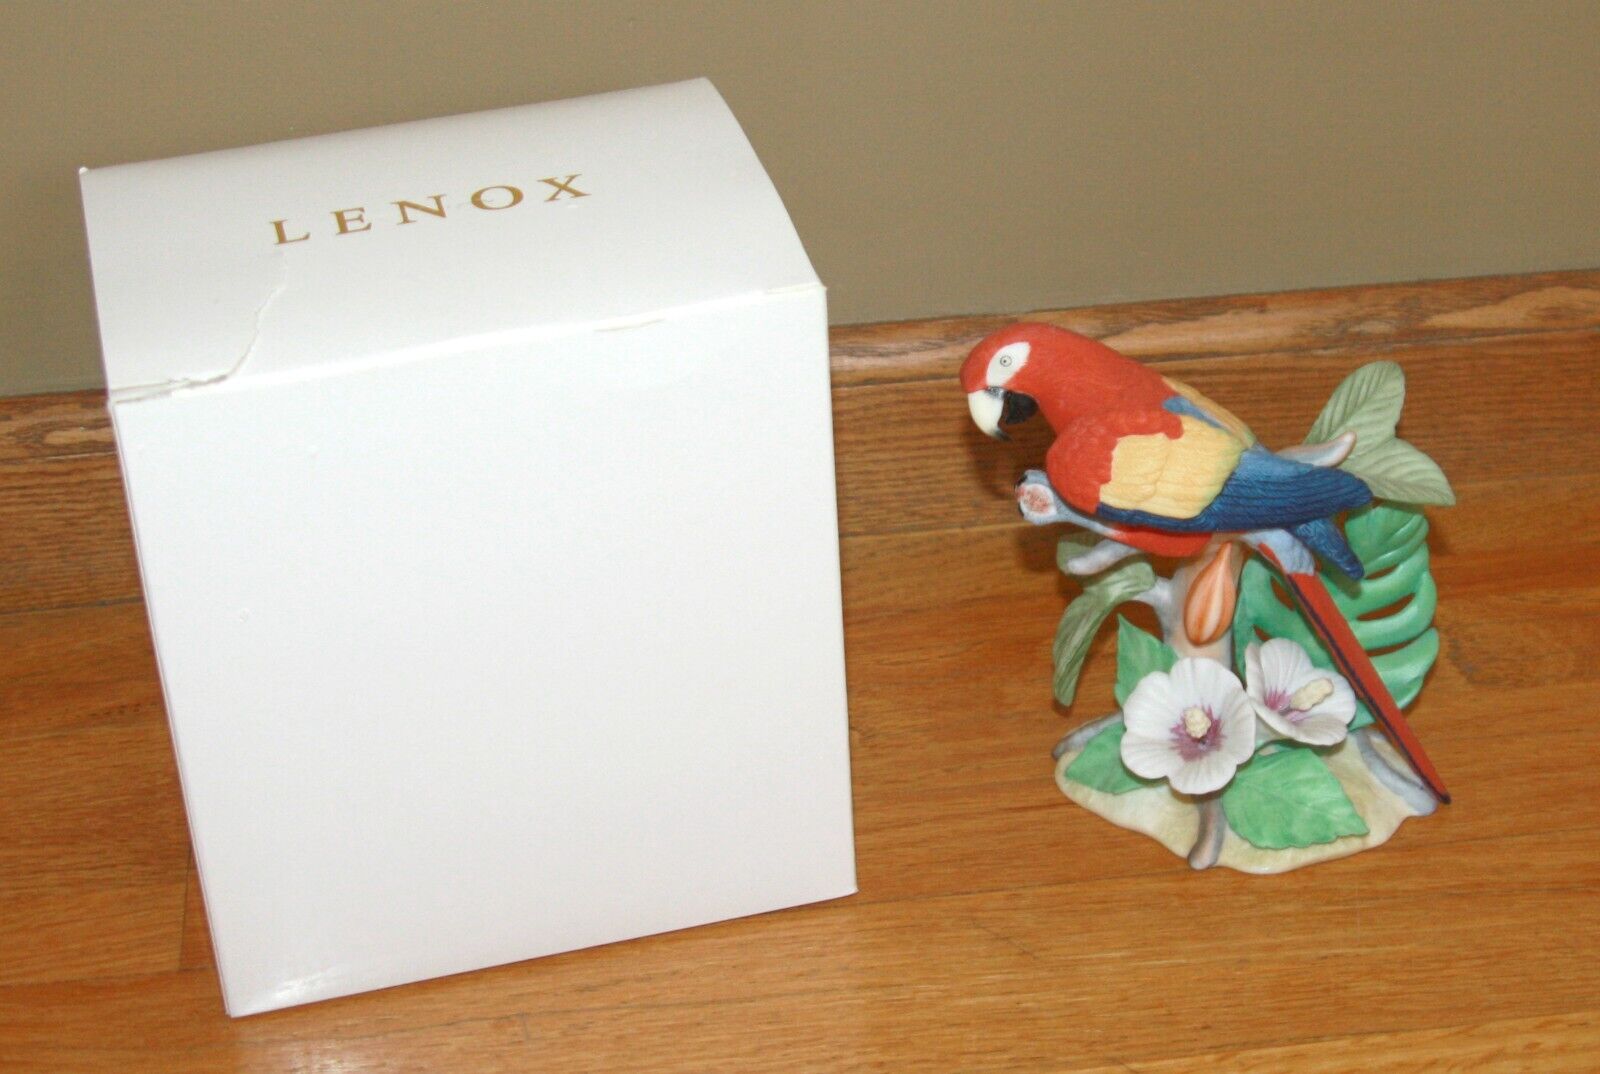 Lenox 2003 Scarlet Macaw porcelain figurine bird Original box